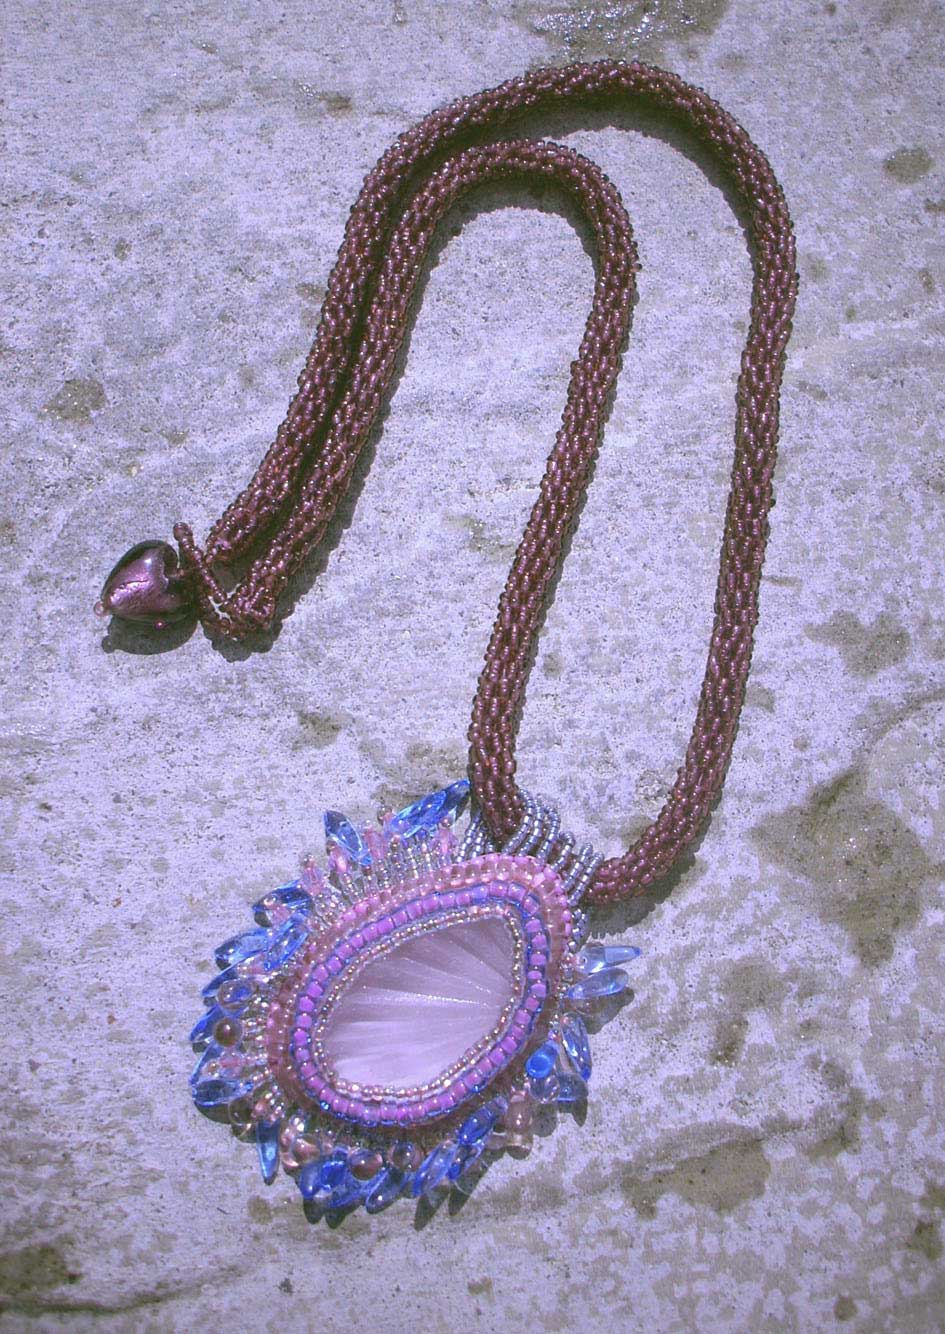 Purple sea glass pendant with sunray effect on glass